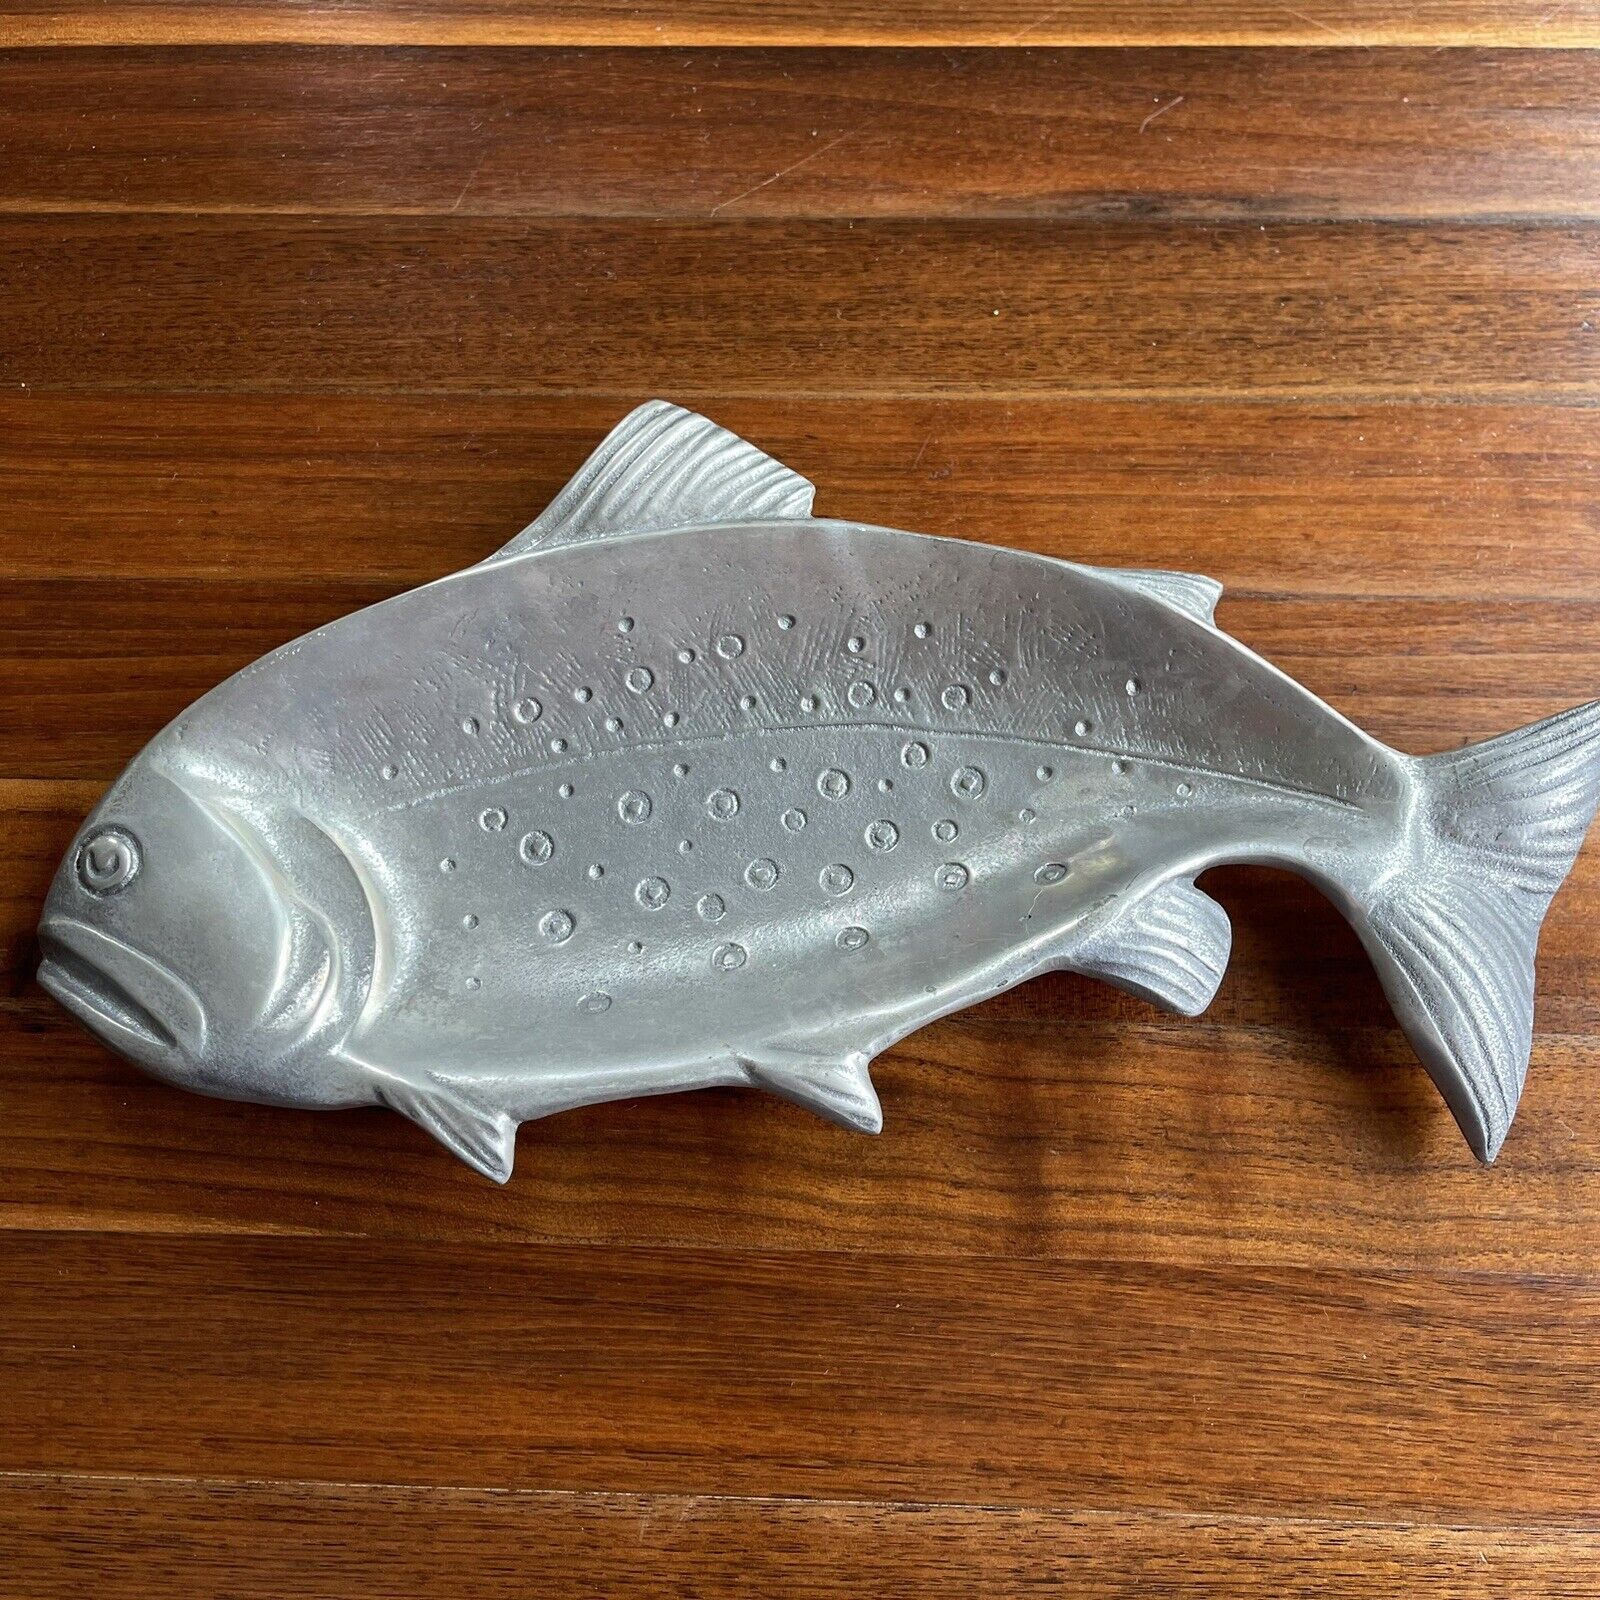 Wilton Co Fish  Shaped Metal Pewter Serving Platter Tray Dish 11.75 X 6”